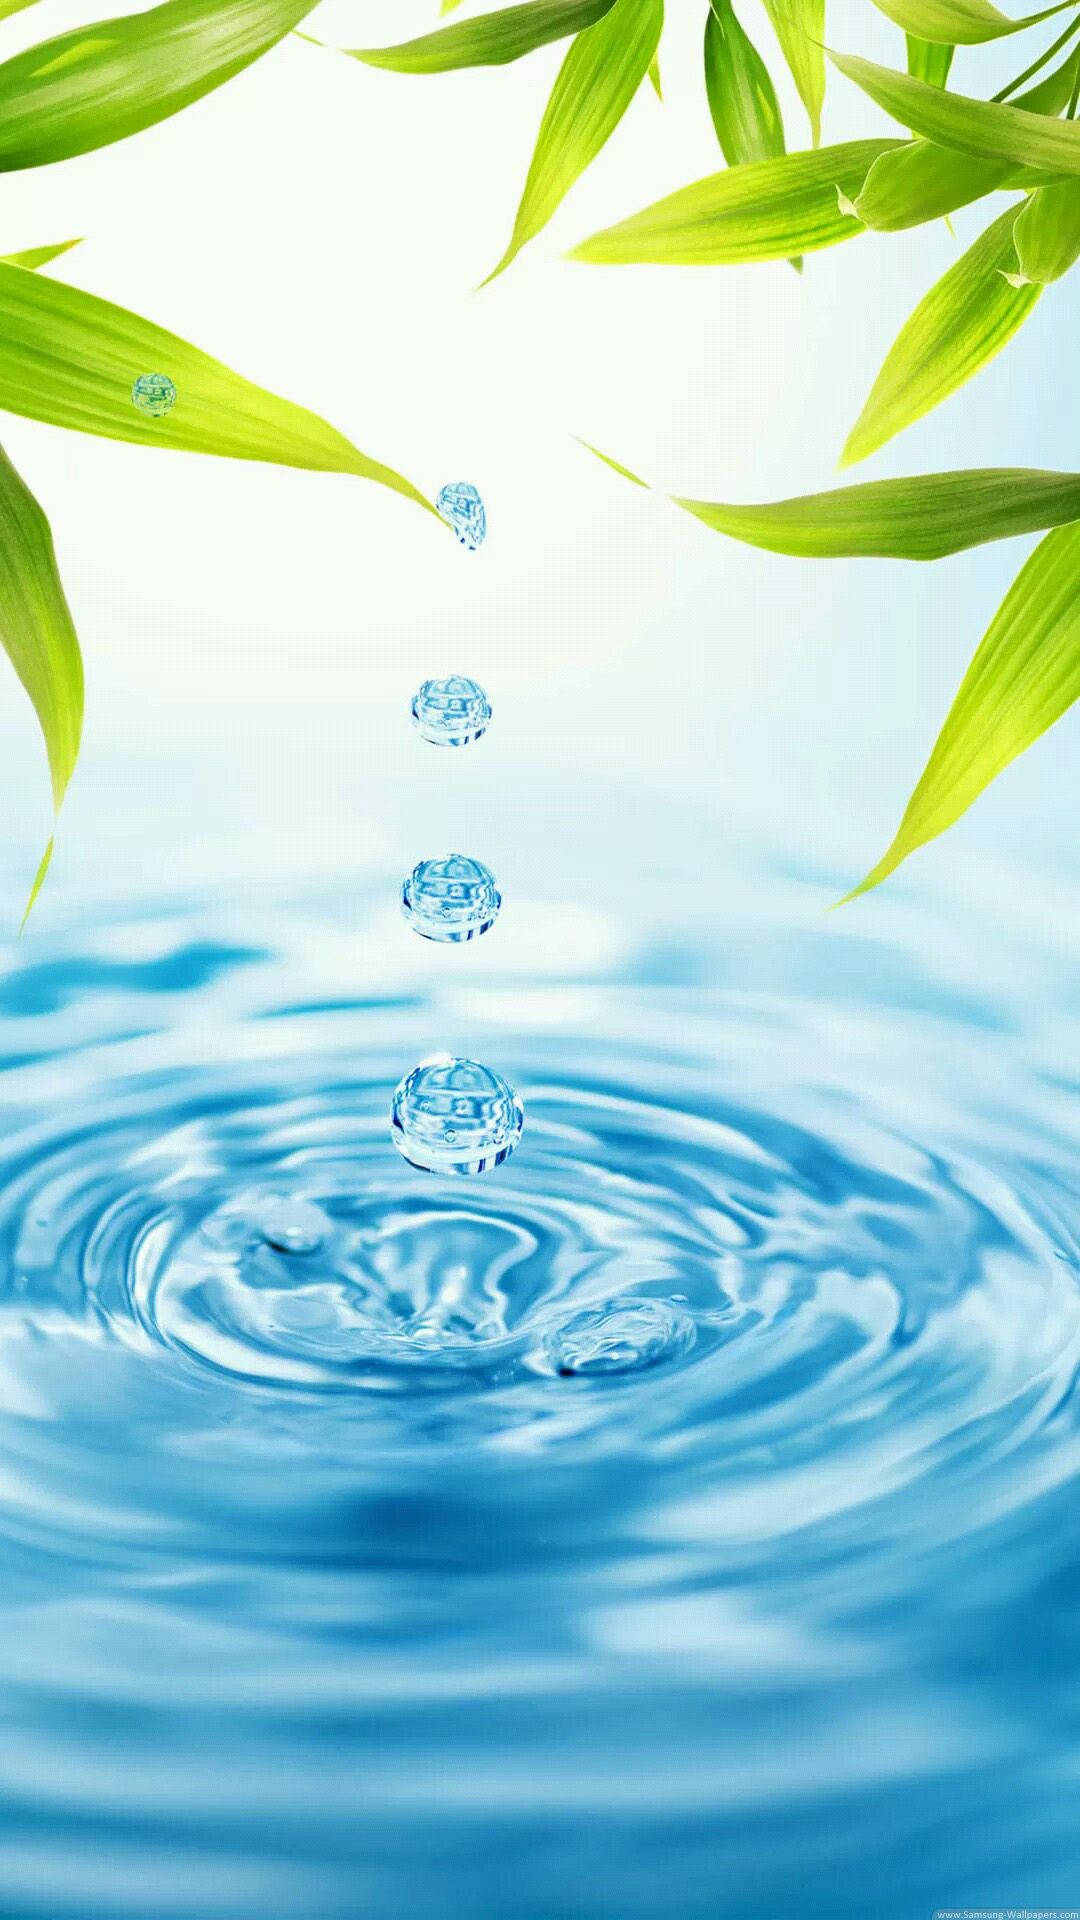 Bamboo Leaves Water Drop IPhone Wallpaper